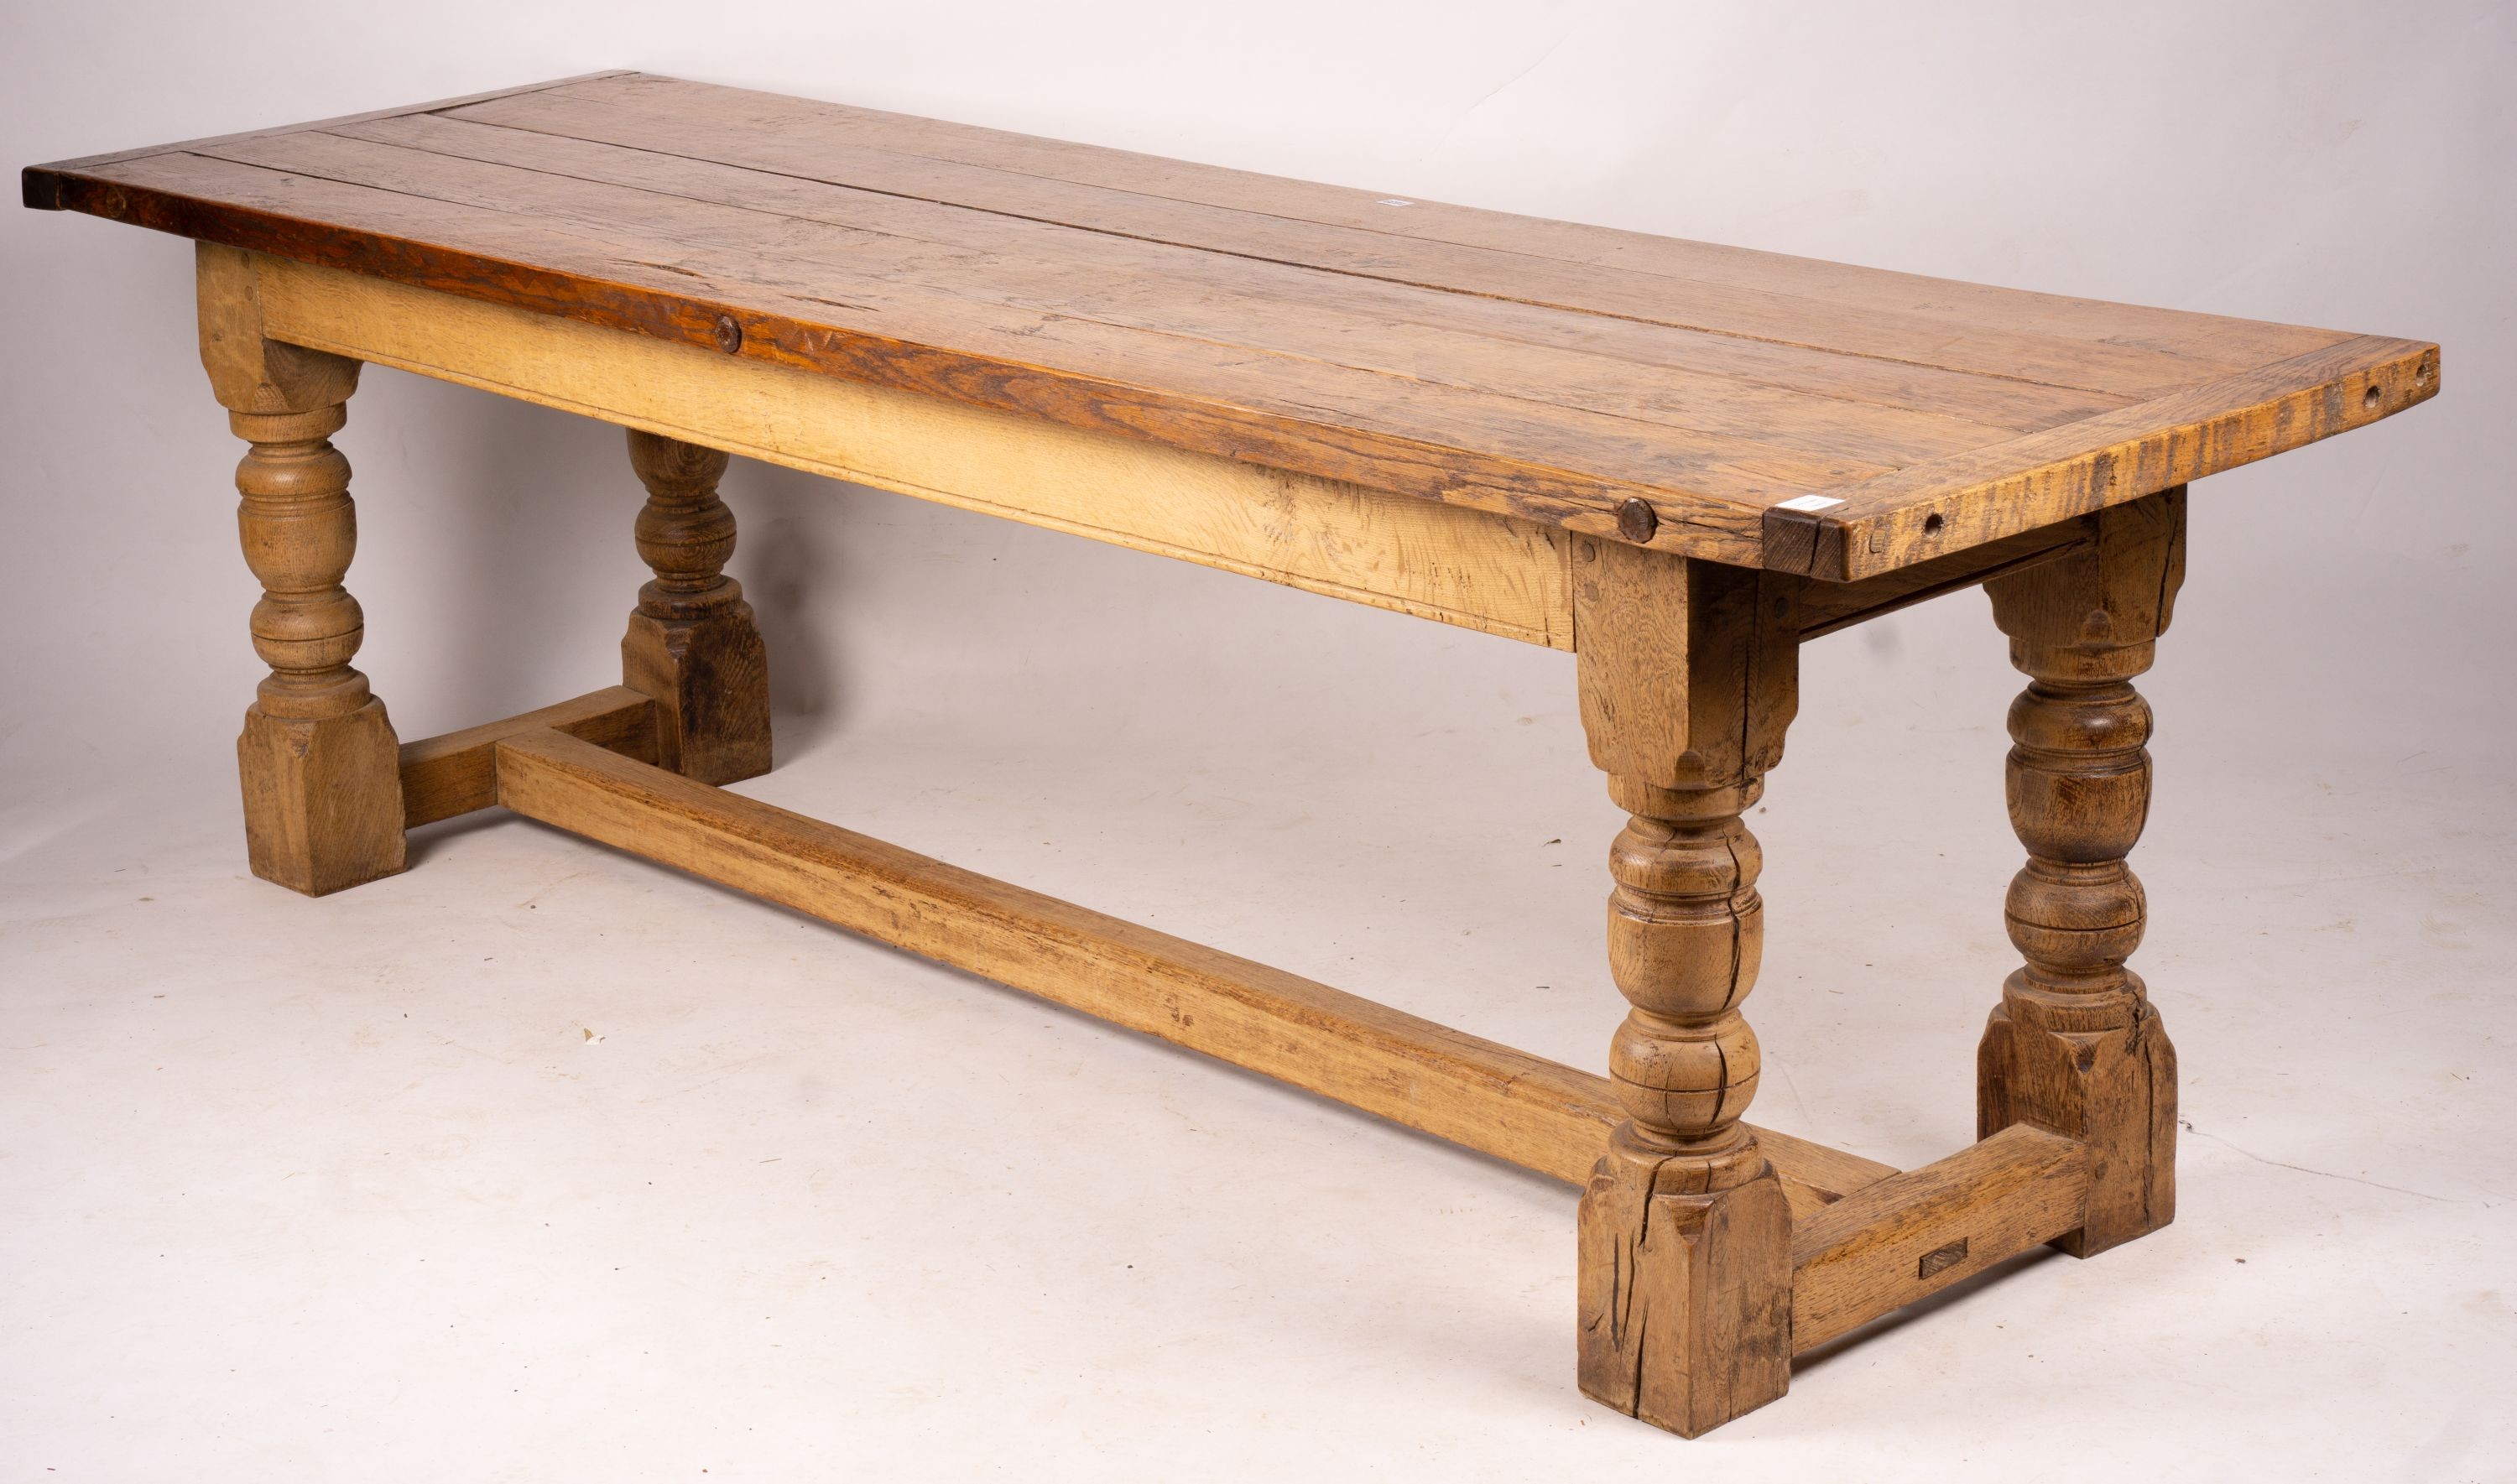 An 18th century style rectangular oak refectory dining table, length 238cm, depth 73cm, height 75cm